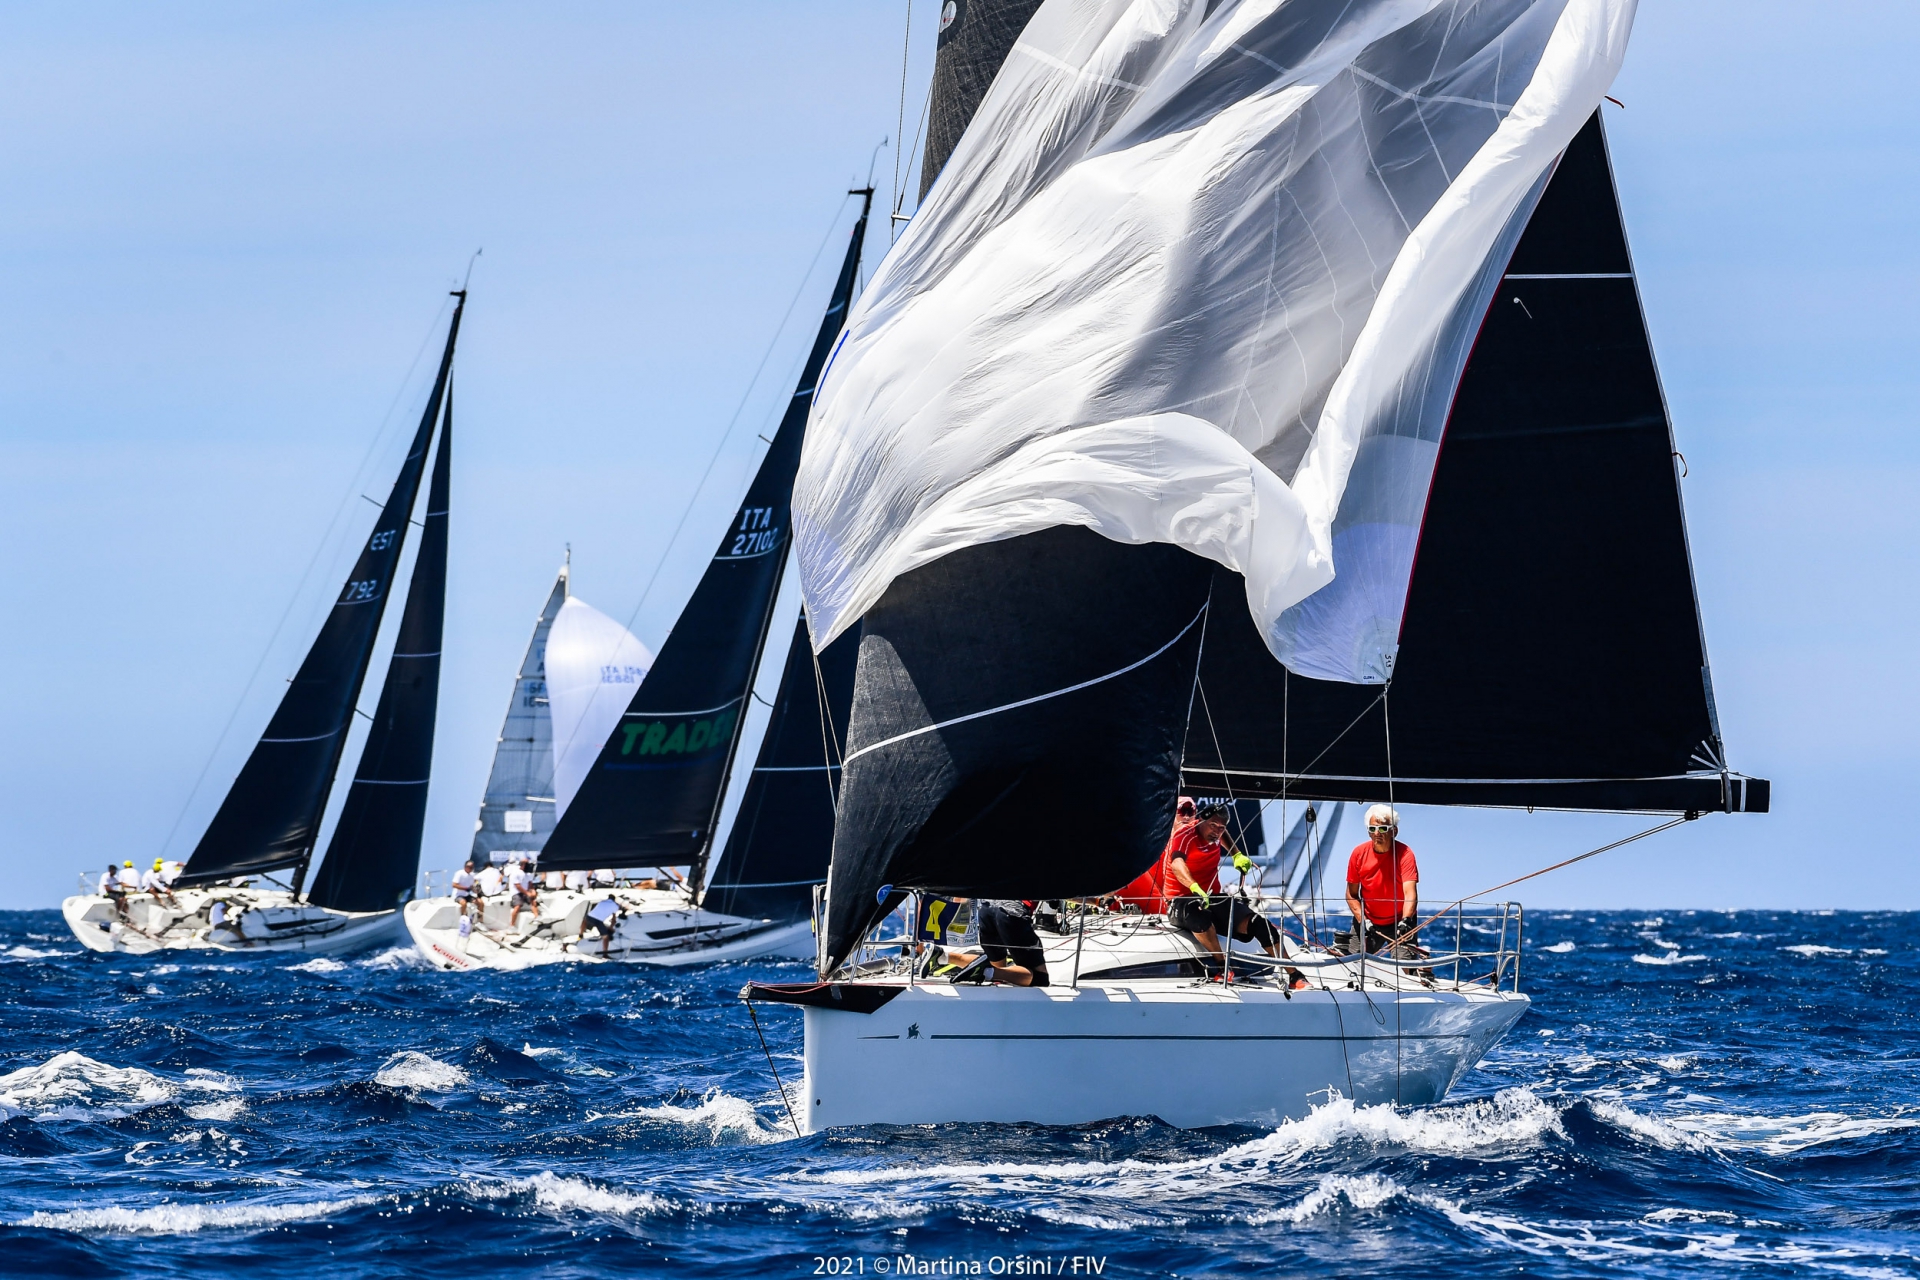  La prima Italia Yachts Sailing Week si terrà a Porto Cervo - Comunicati Stampa - Yacht Club Costa Smeralda